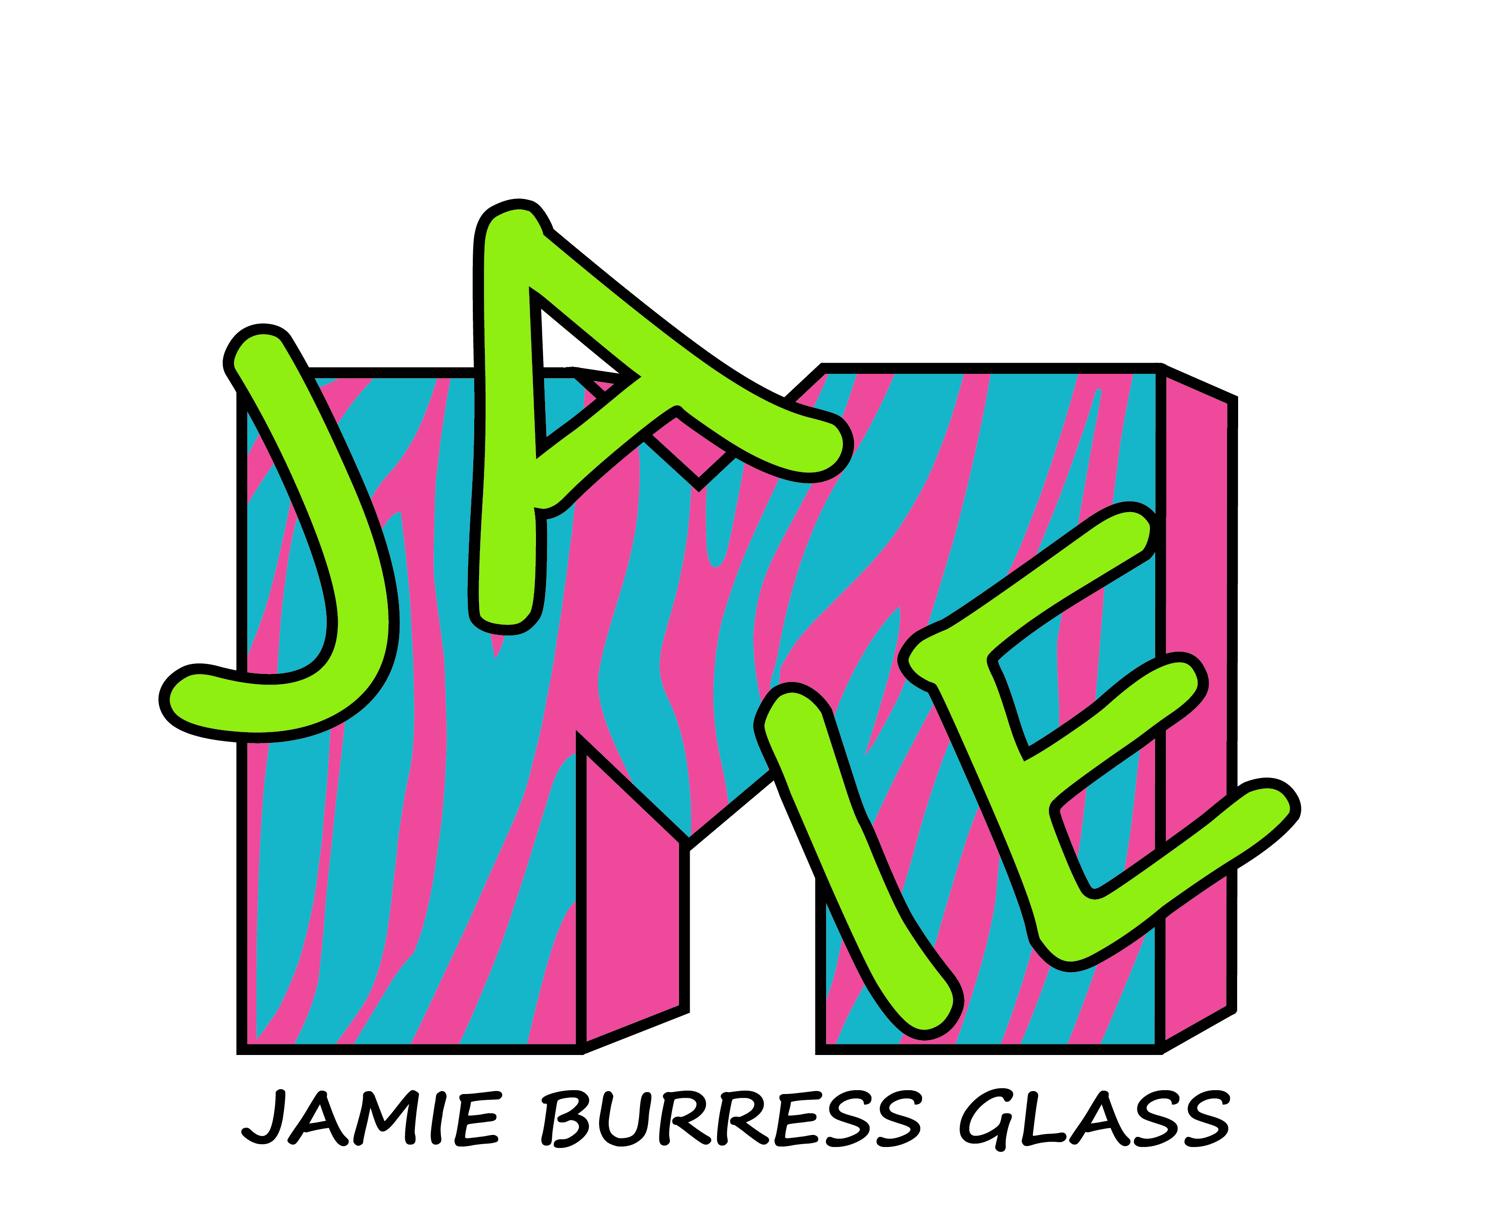 Jamie Burress-Kovacs Glass Art